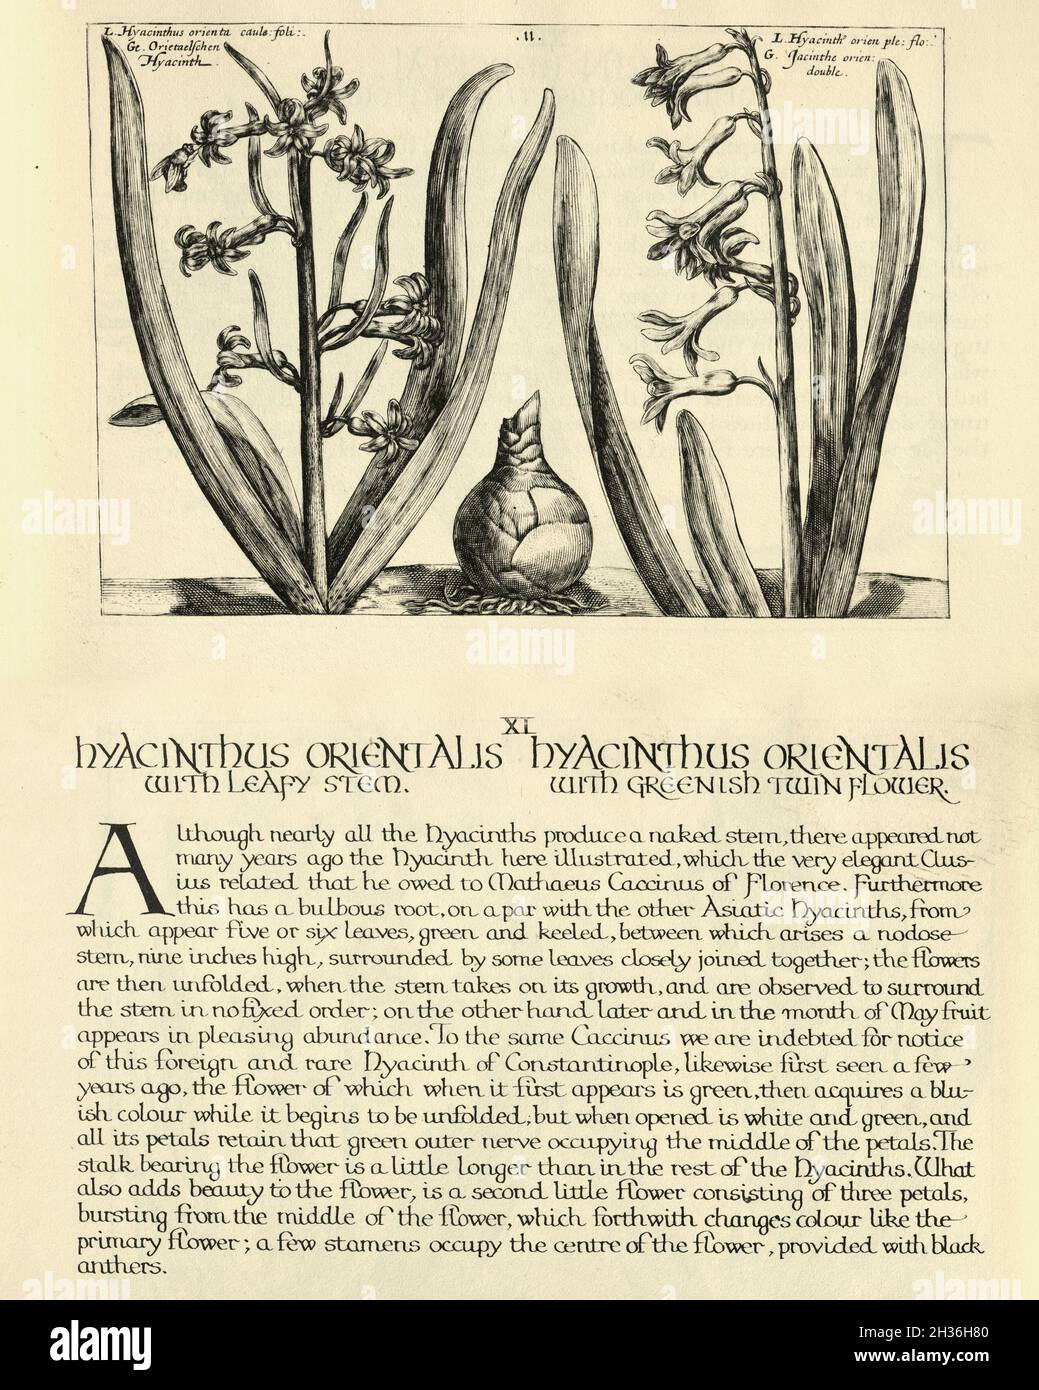 Stampa botanica di Hyacinthus orientalis, ommon giacinto, da Hortus Floridus di Crispin de Passe, illustrazione d'epoca Foto Stock